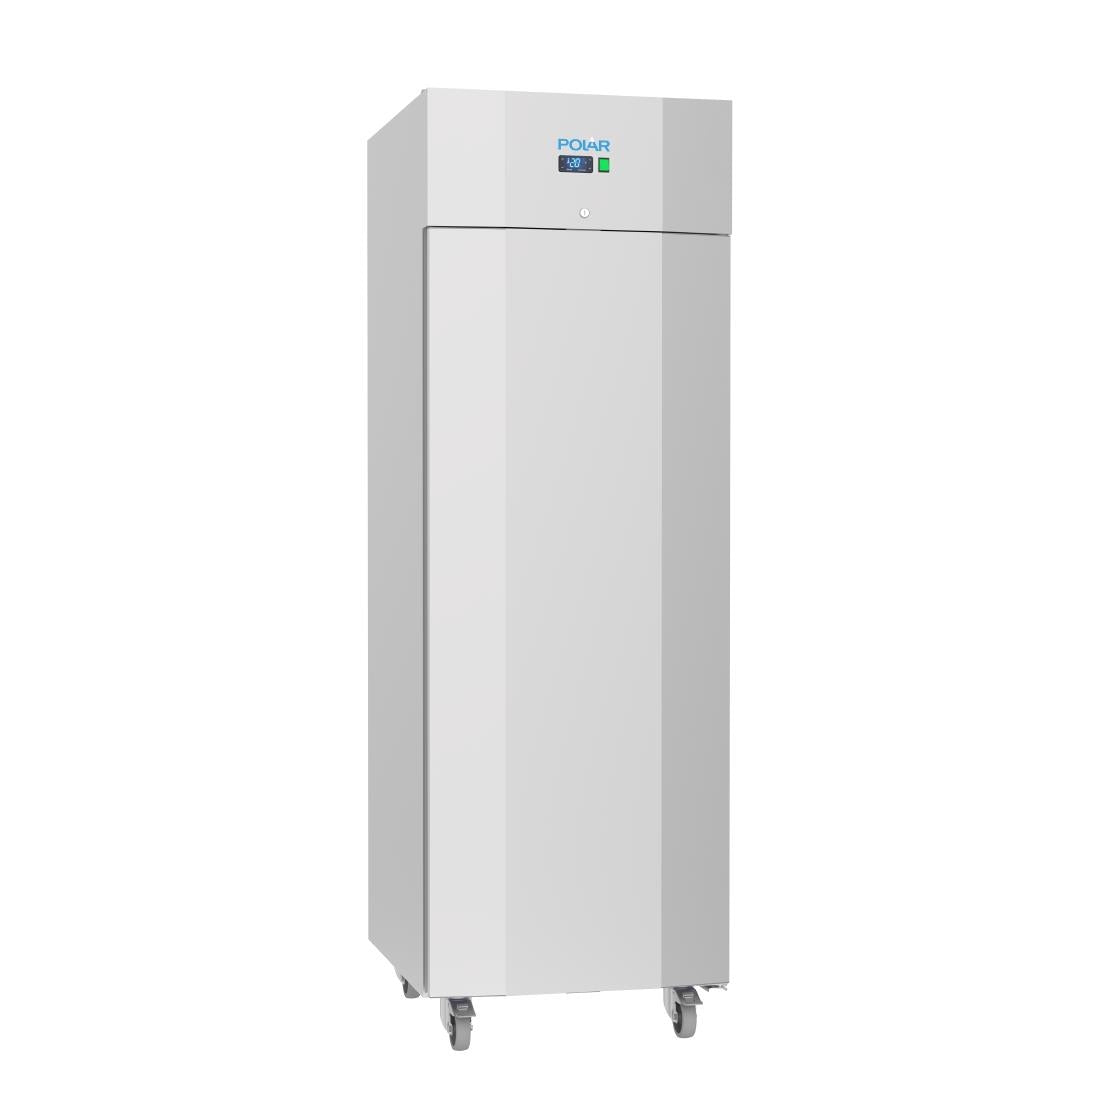 UA031 Polar U-Series Energy Efficient Single Door Upright Freezer 700Ltr